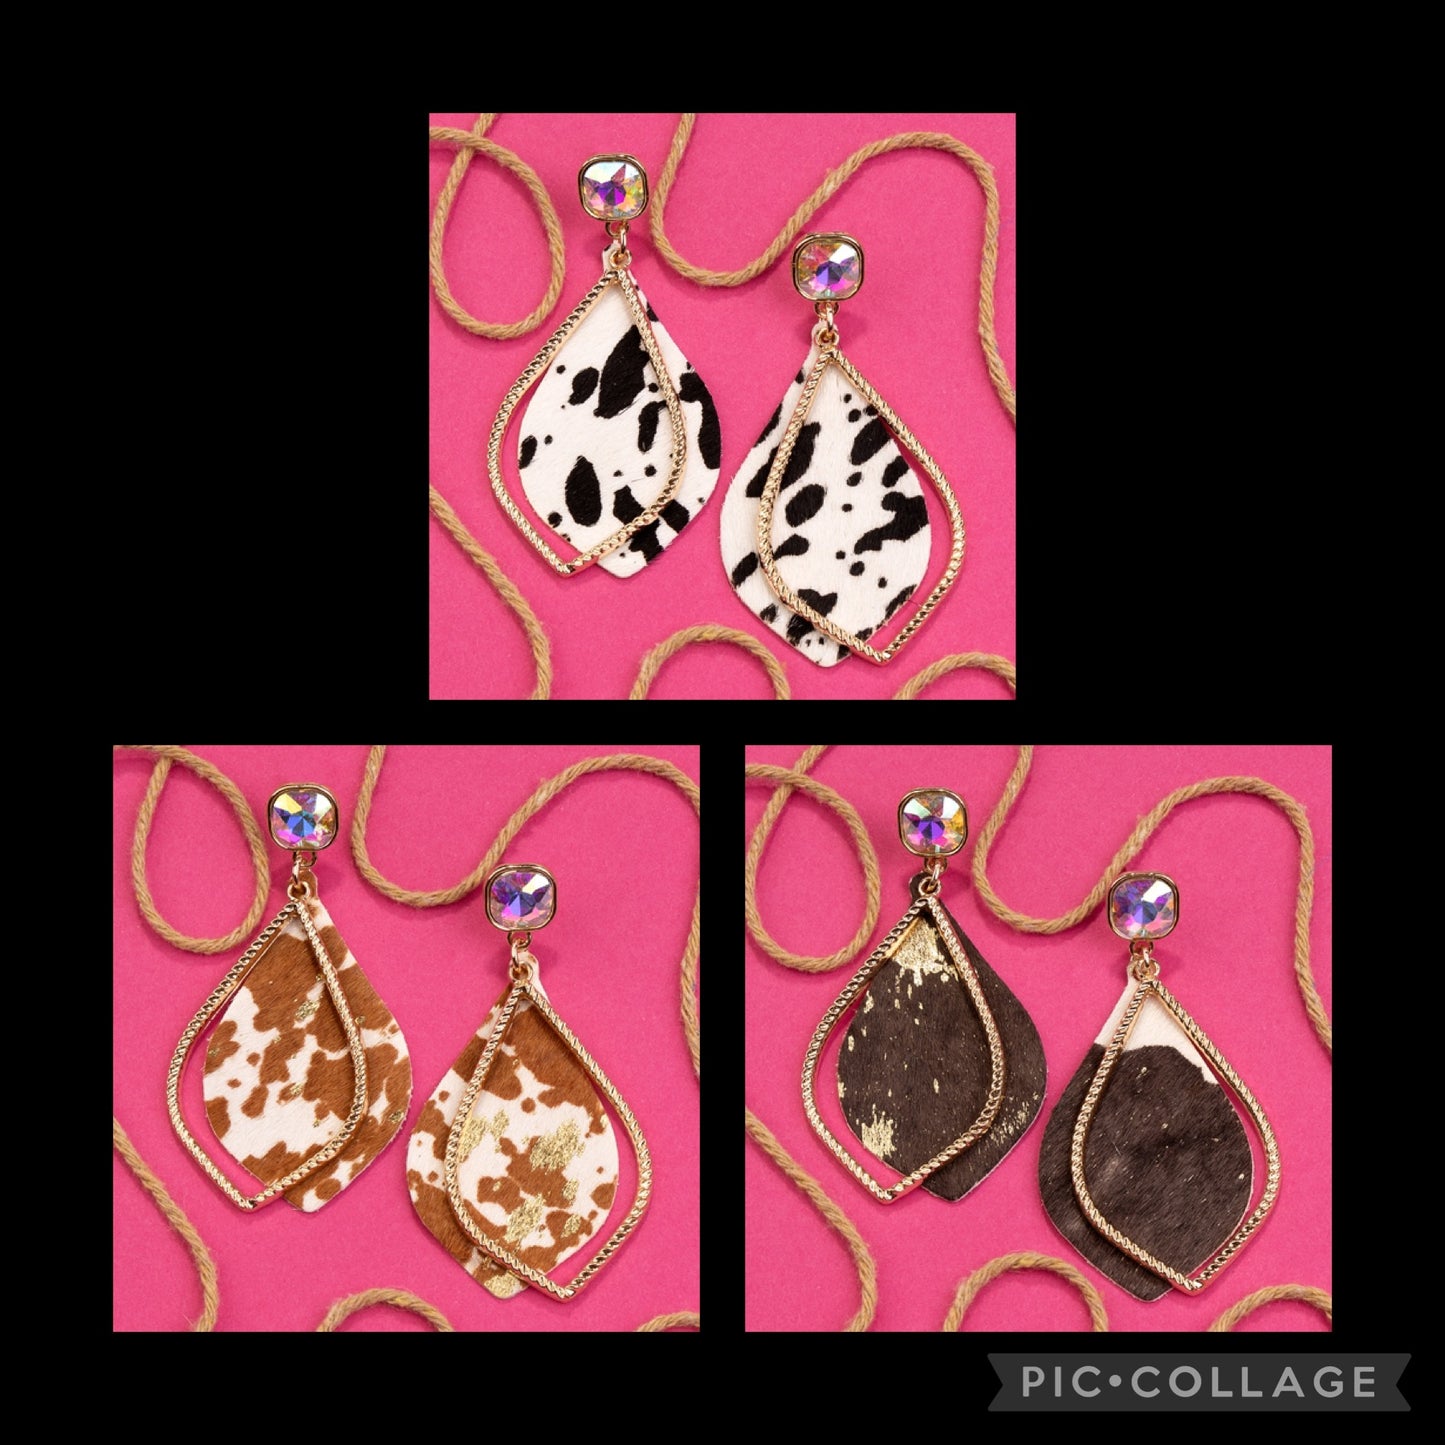 Gorgeous ab/animal print earrings